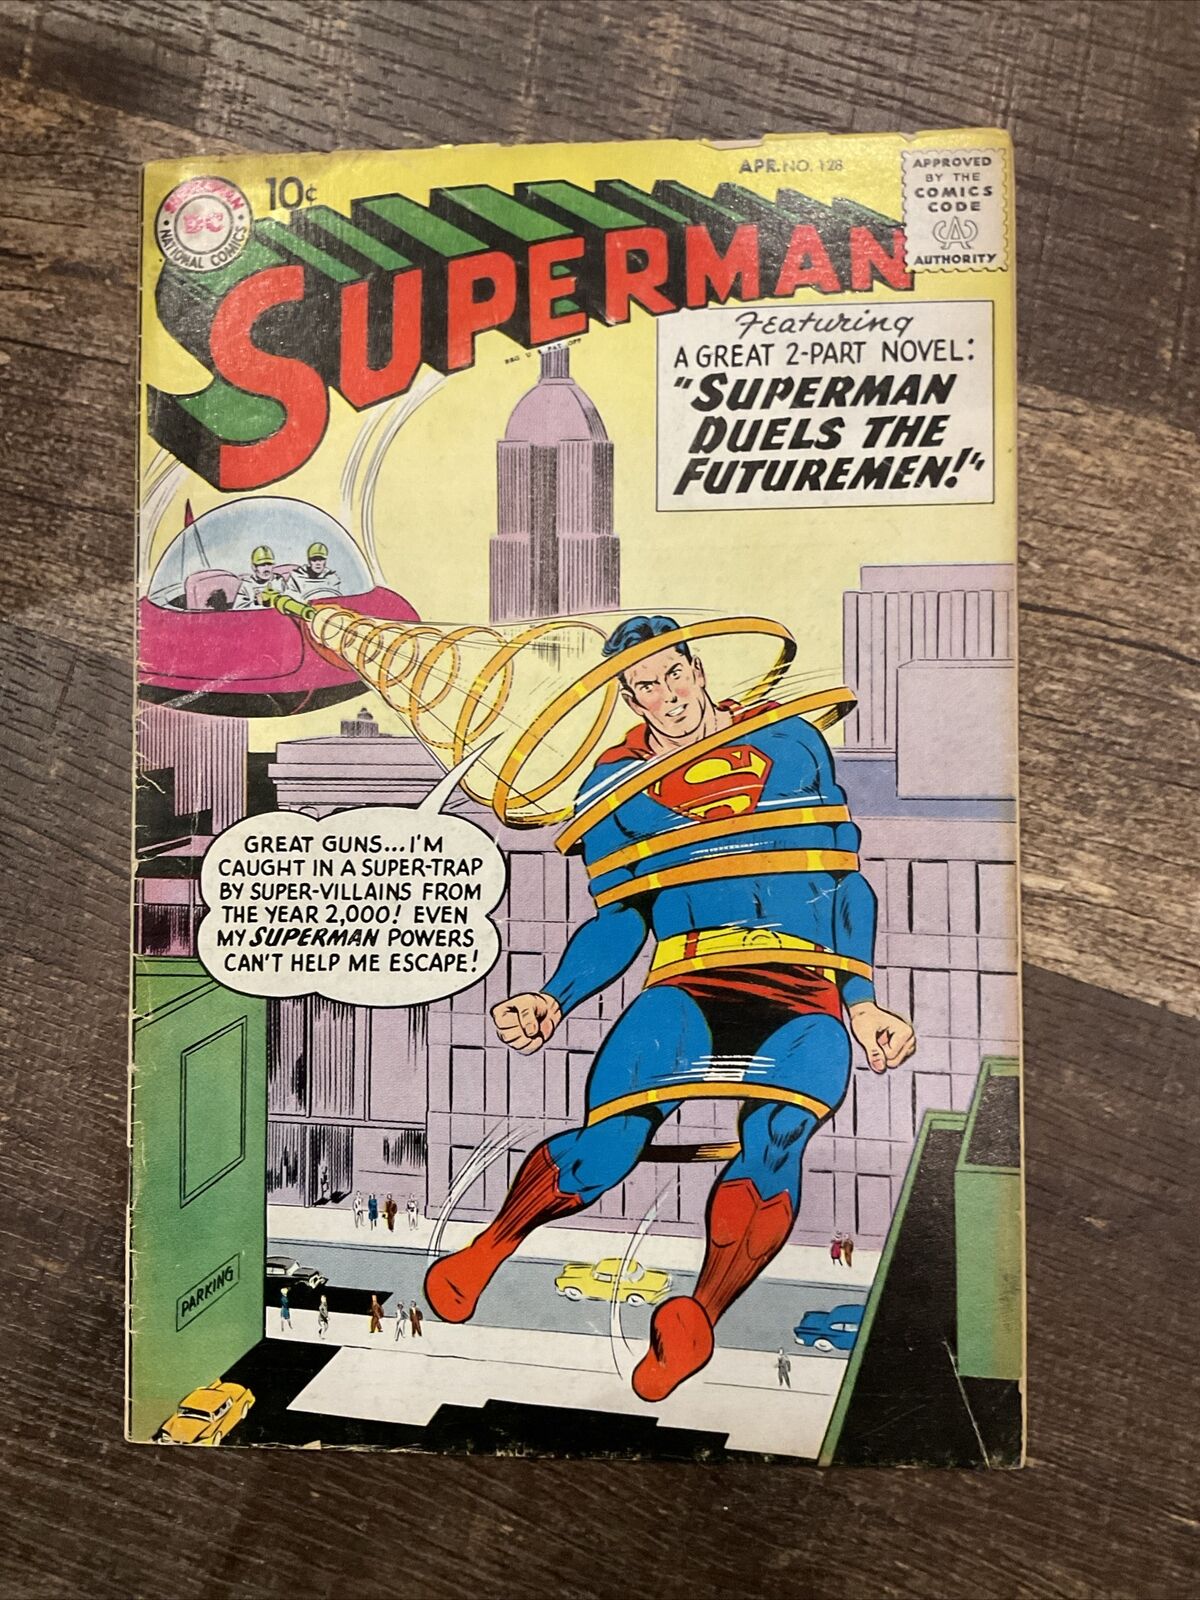 SUPERMAN # 128 DC COMICS April 1959 RED KRYPTONITE 1st APPEARANCE SILVER AGE